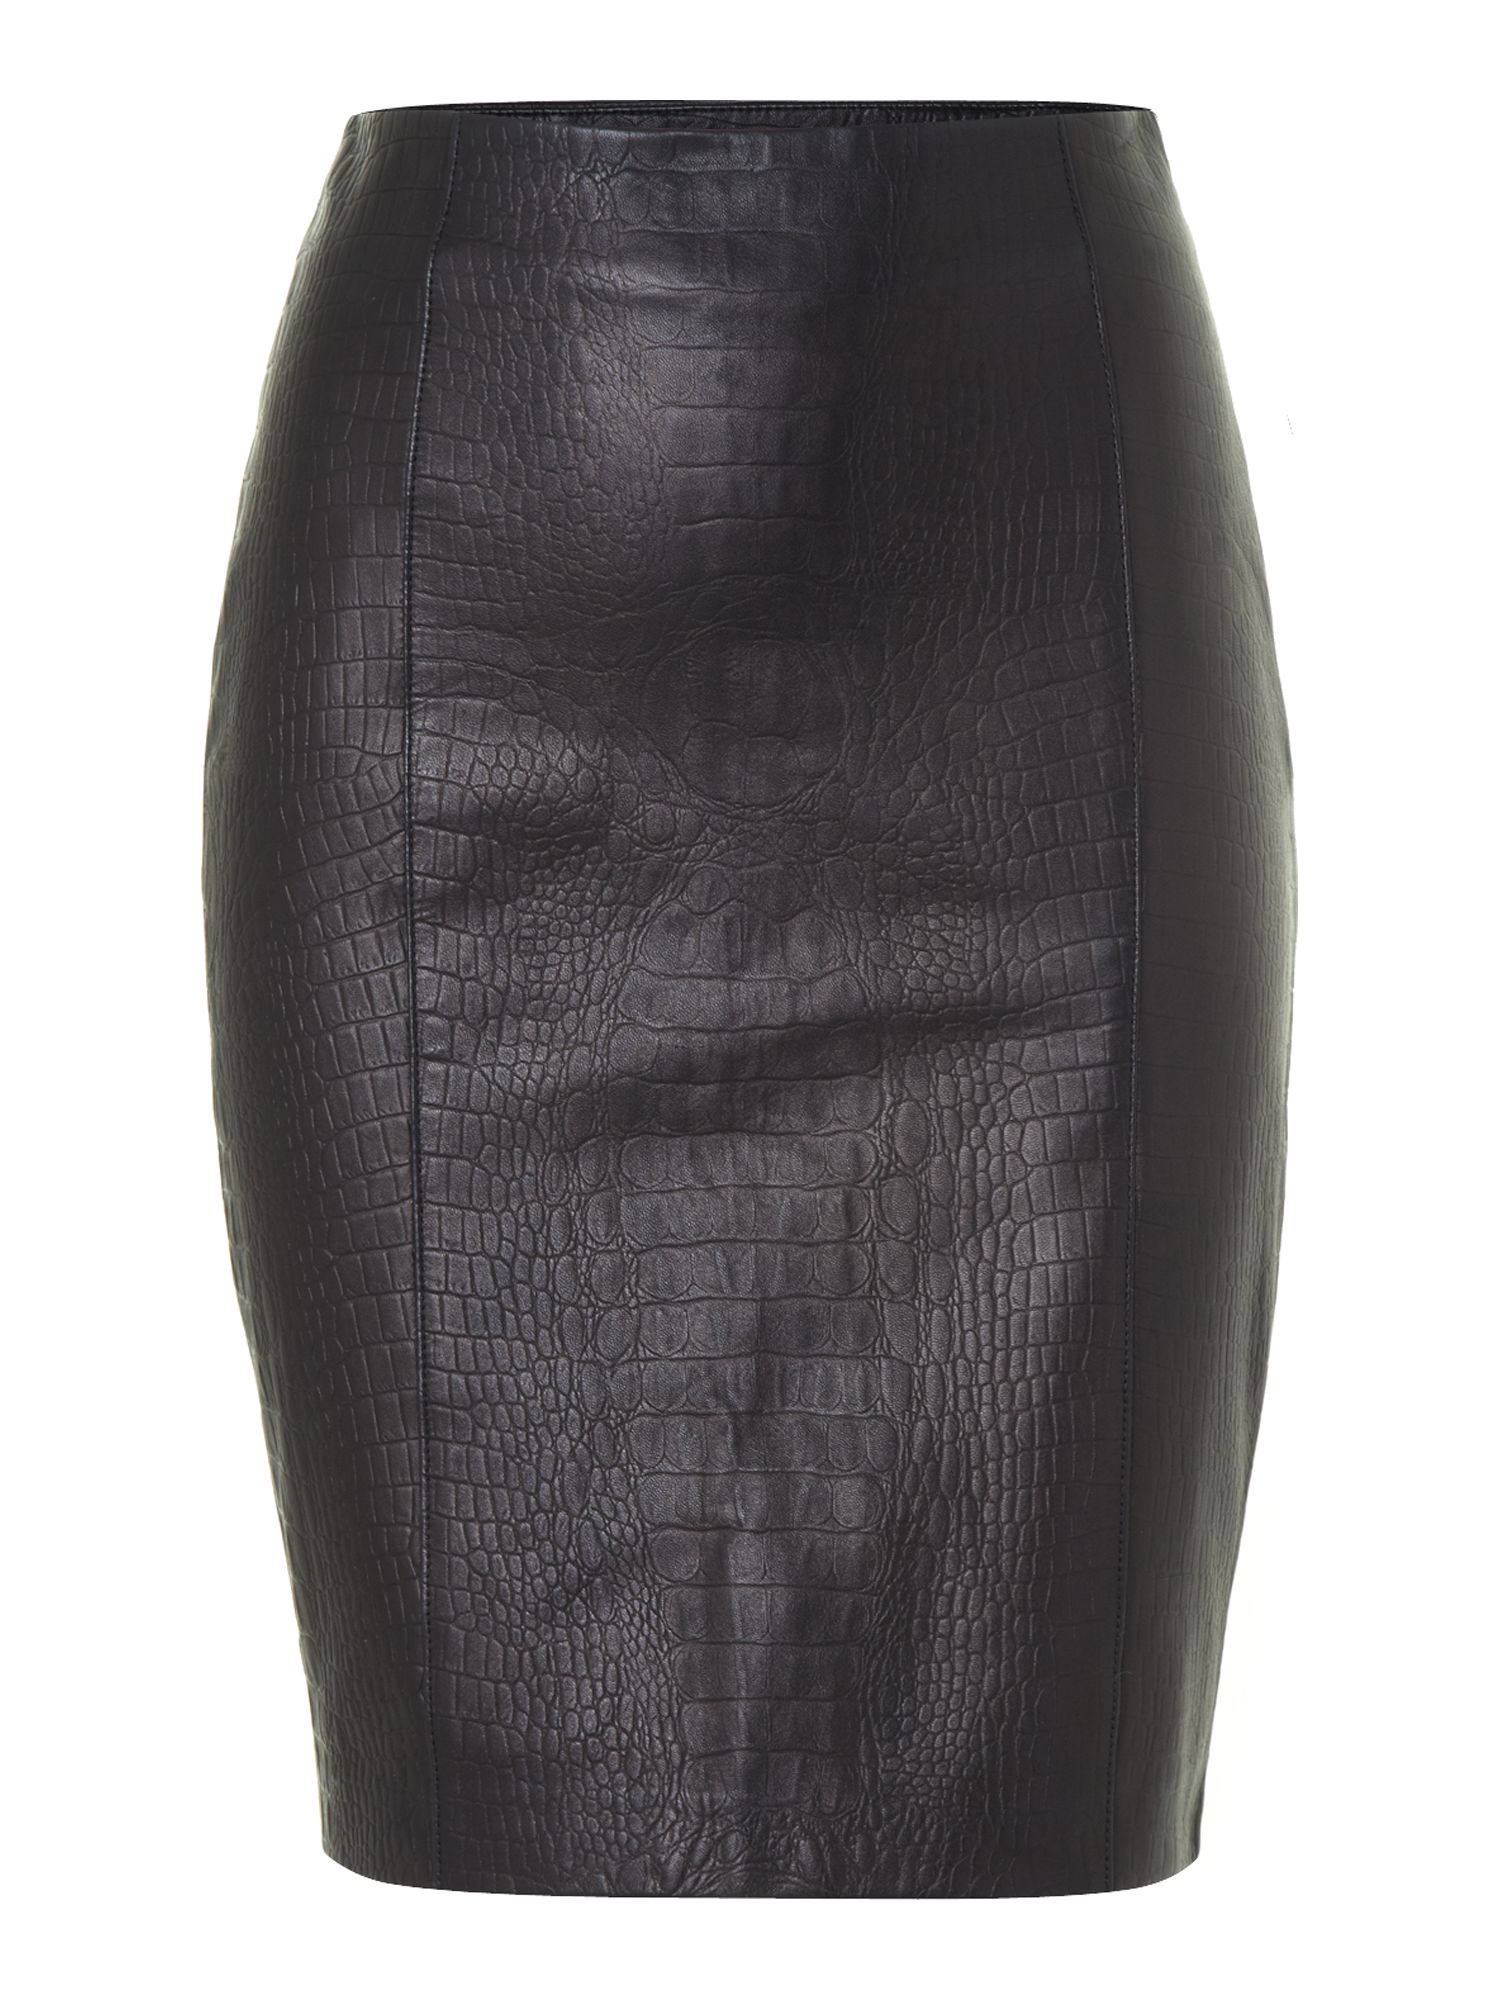 Lauren by ralph lauren Leather Pencil Skirt with Snakeskin Texture in ...